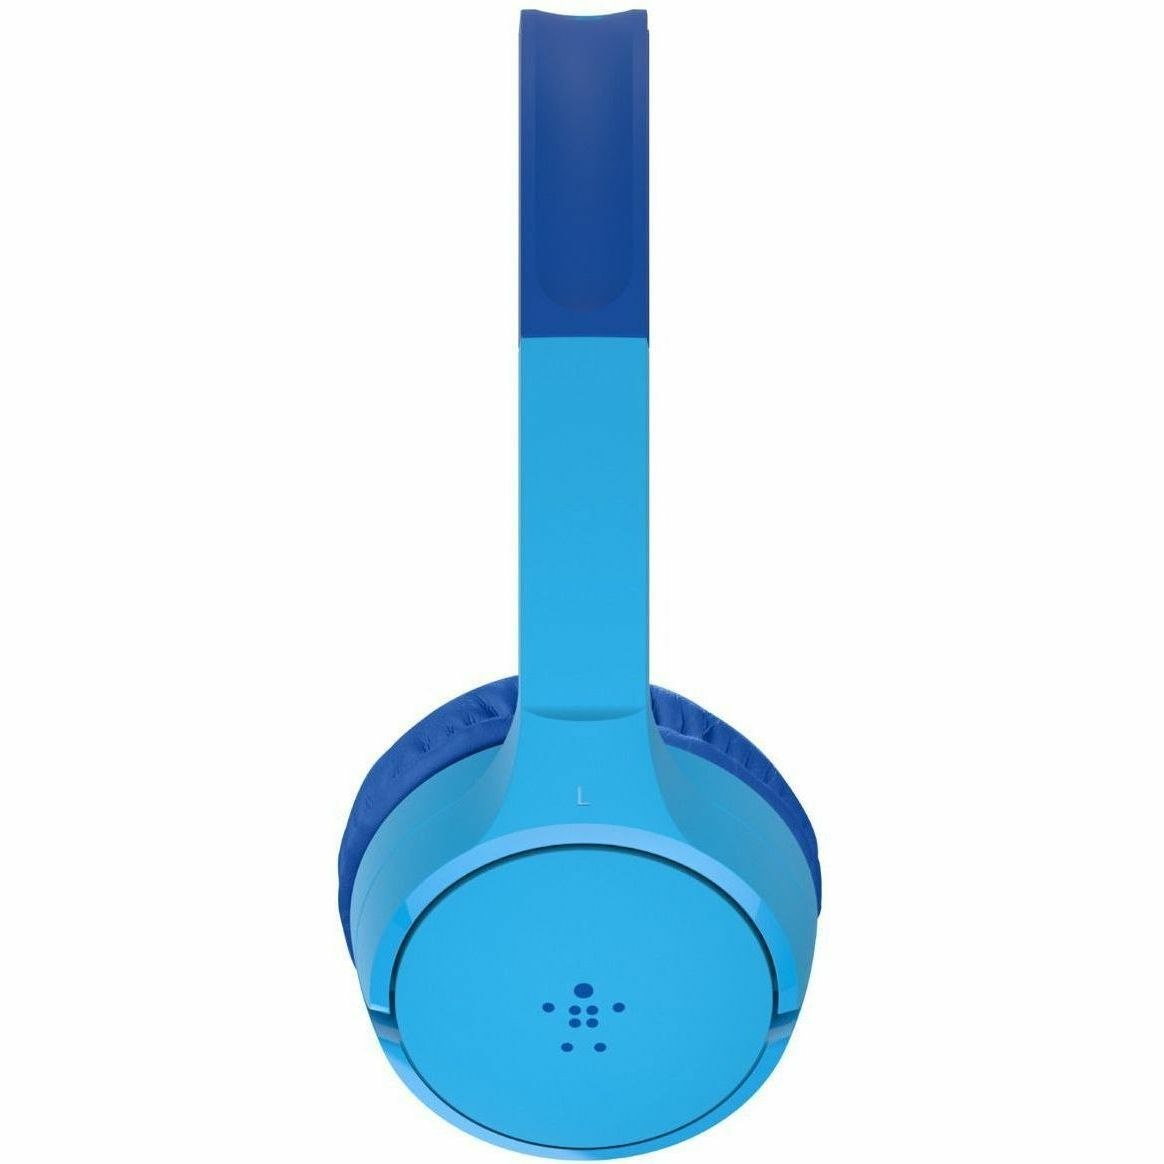 Belkin SOUNDFORM Mini Wired/Wireless On-ear, Over-the-head Stereo Headset - Blue